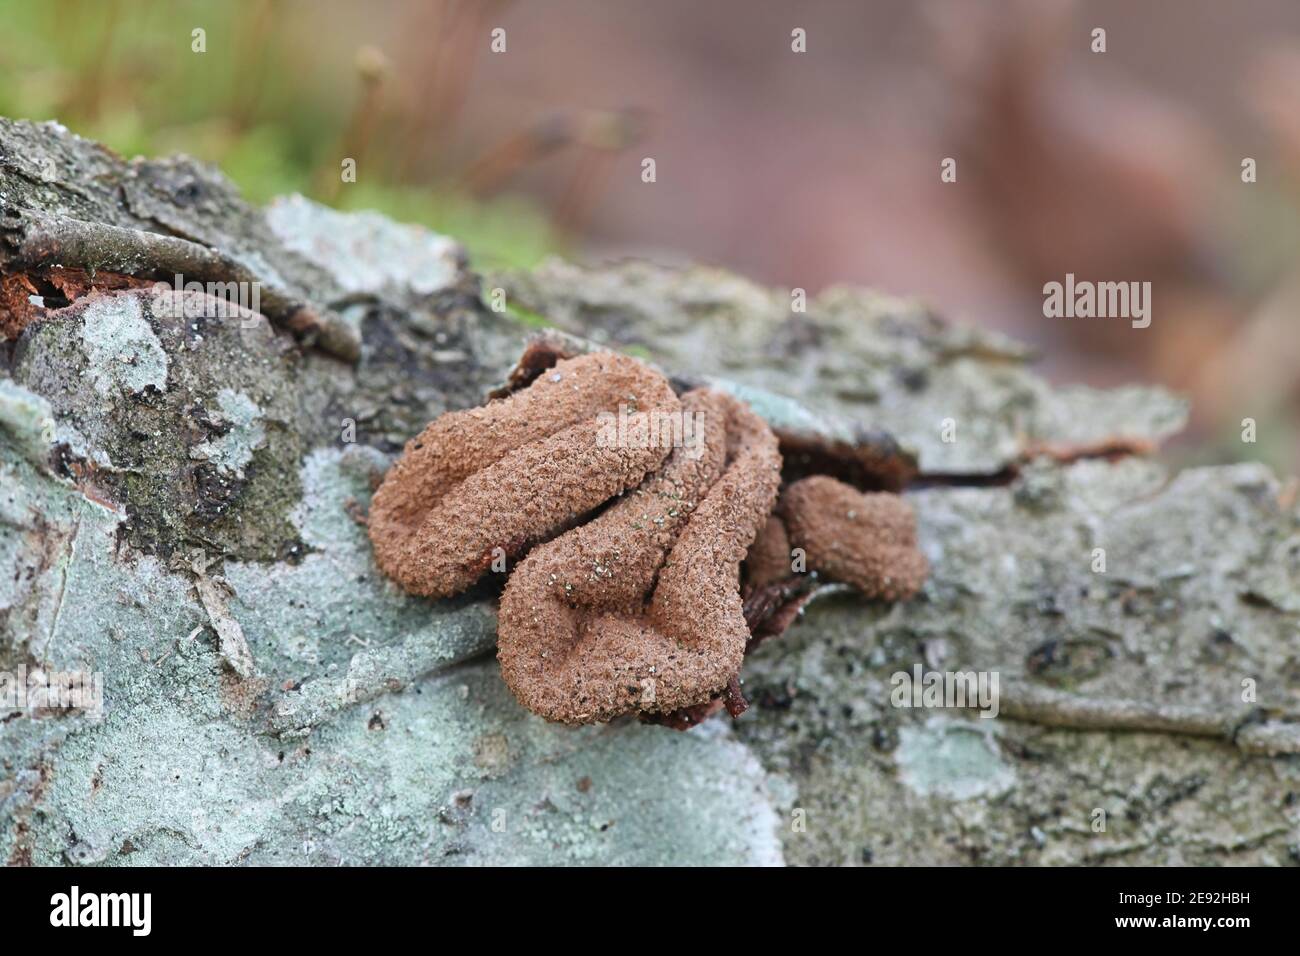 Encoelia furfuracea, known as spring hazelcup, wild fungus from Finland Stock Photo